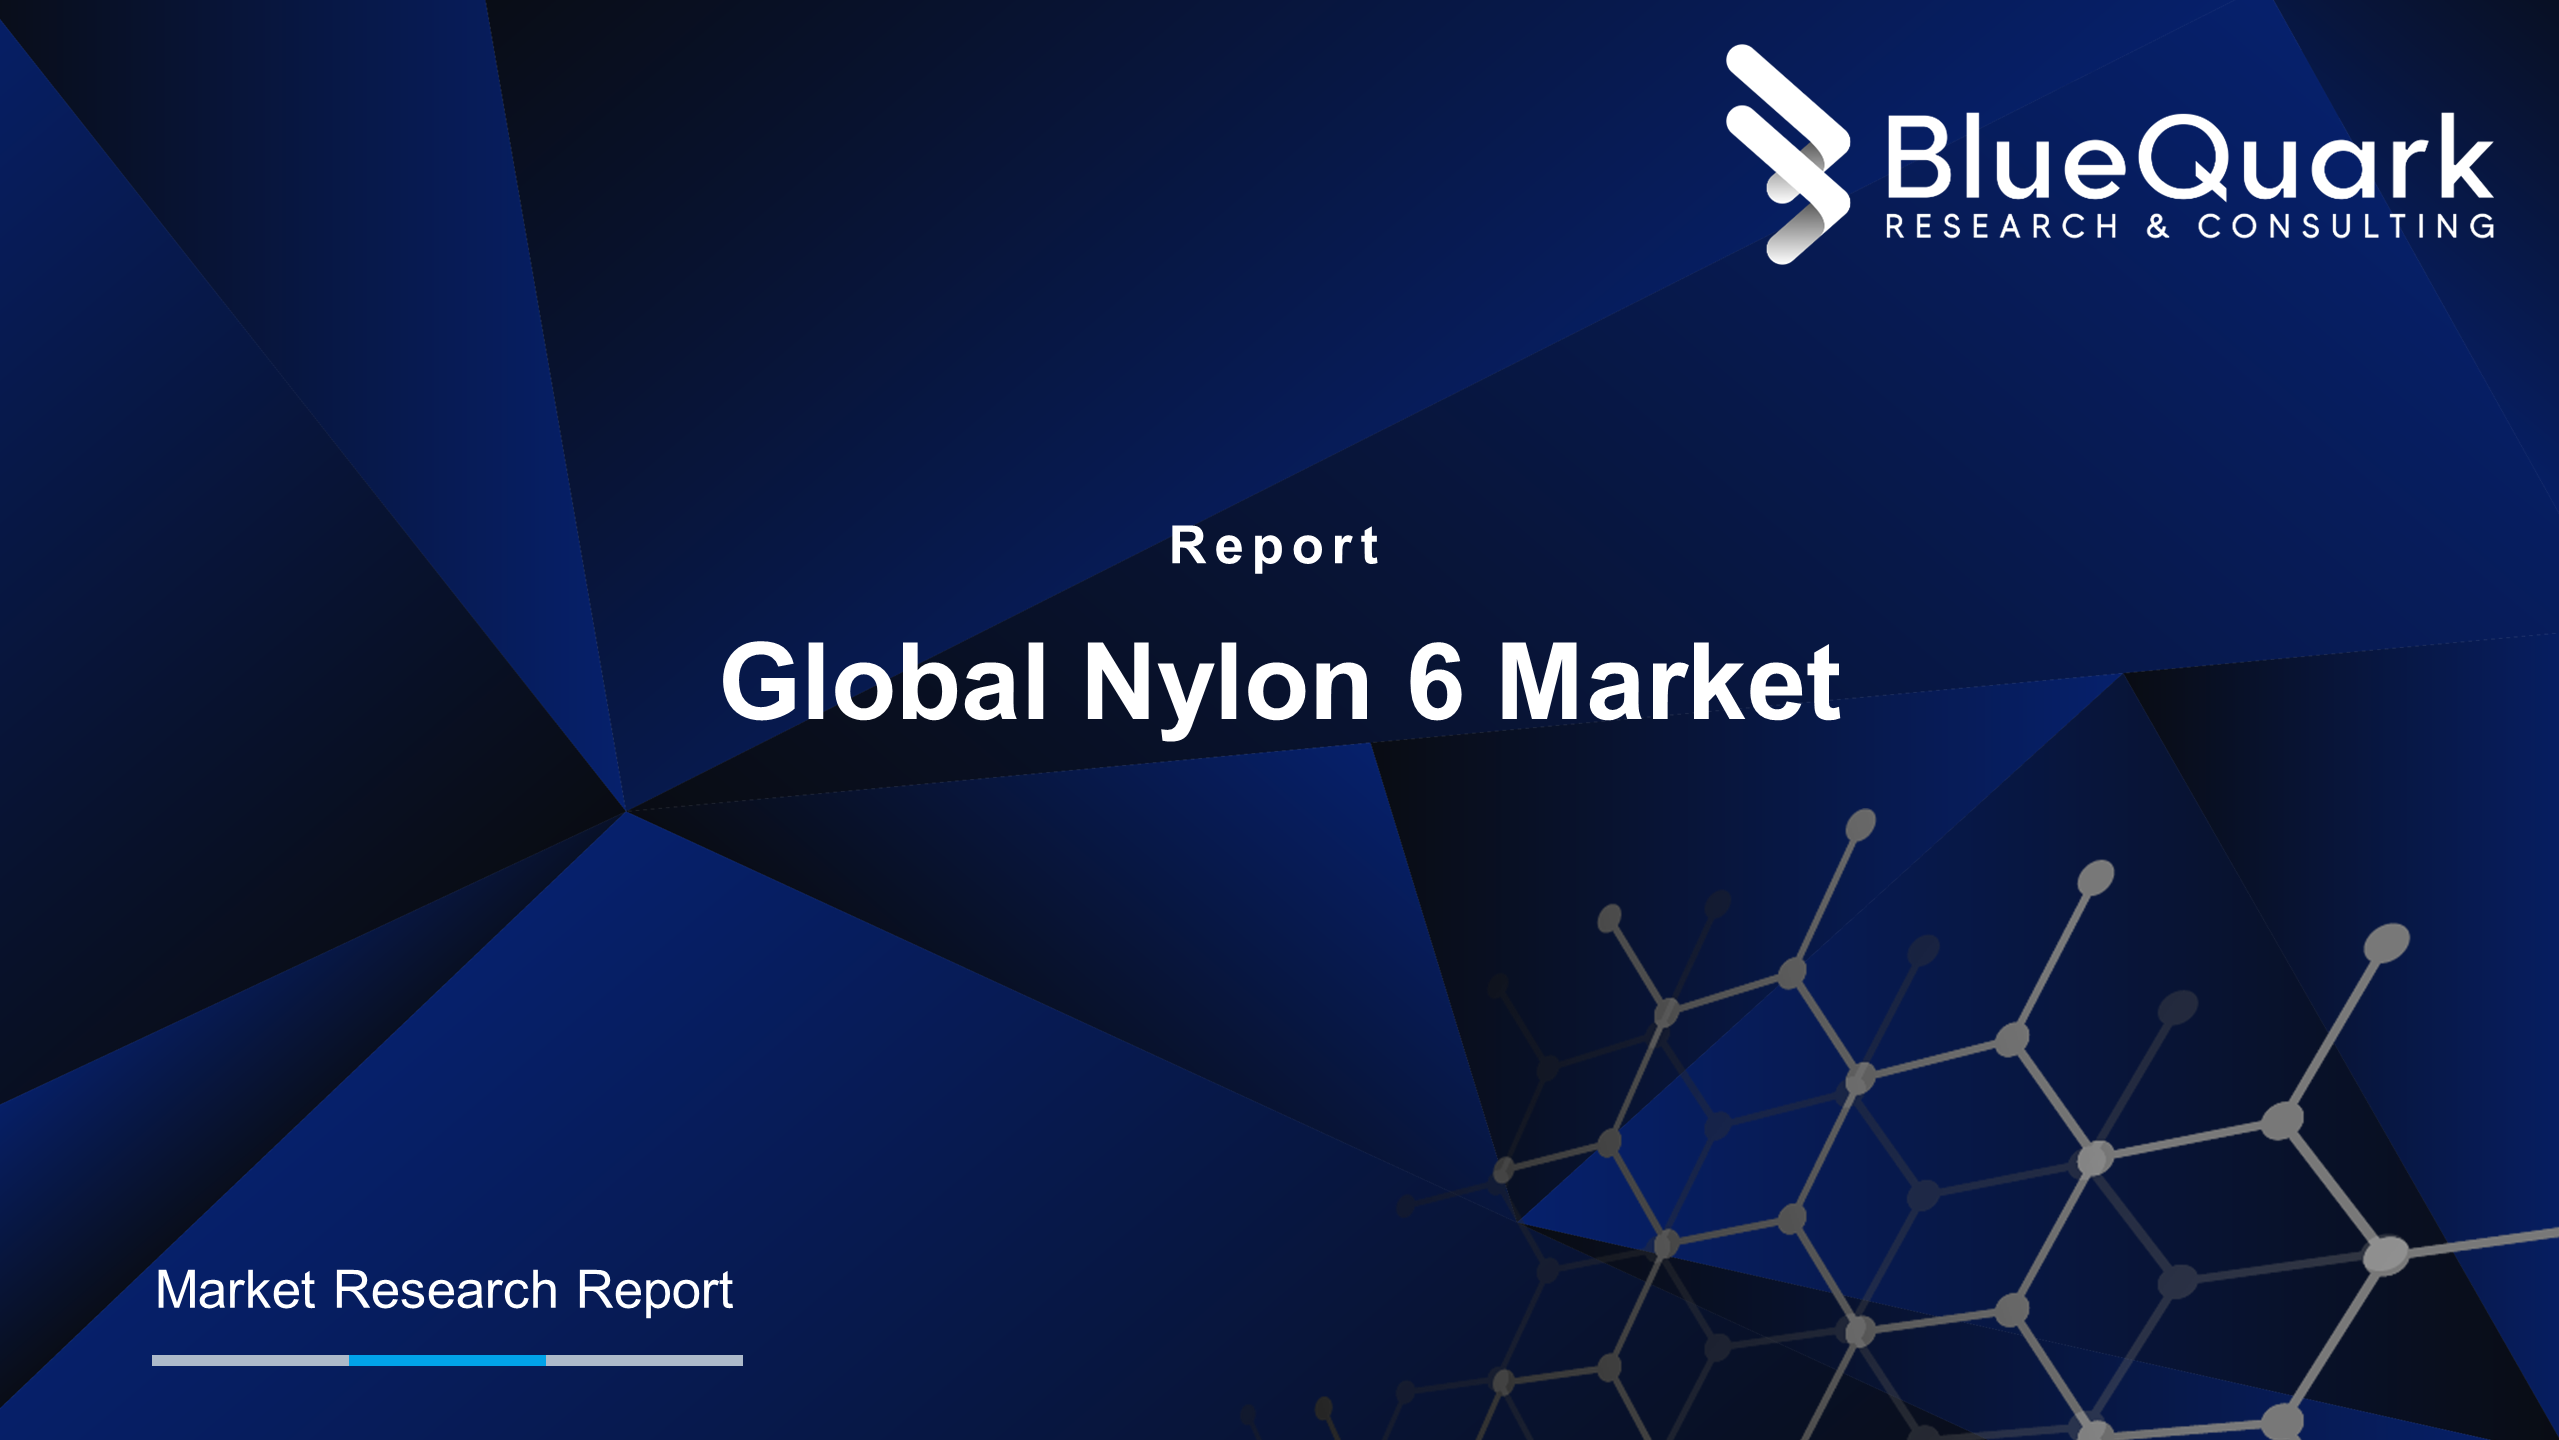 Global Nylon 6 Market Outlook to 2029